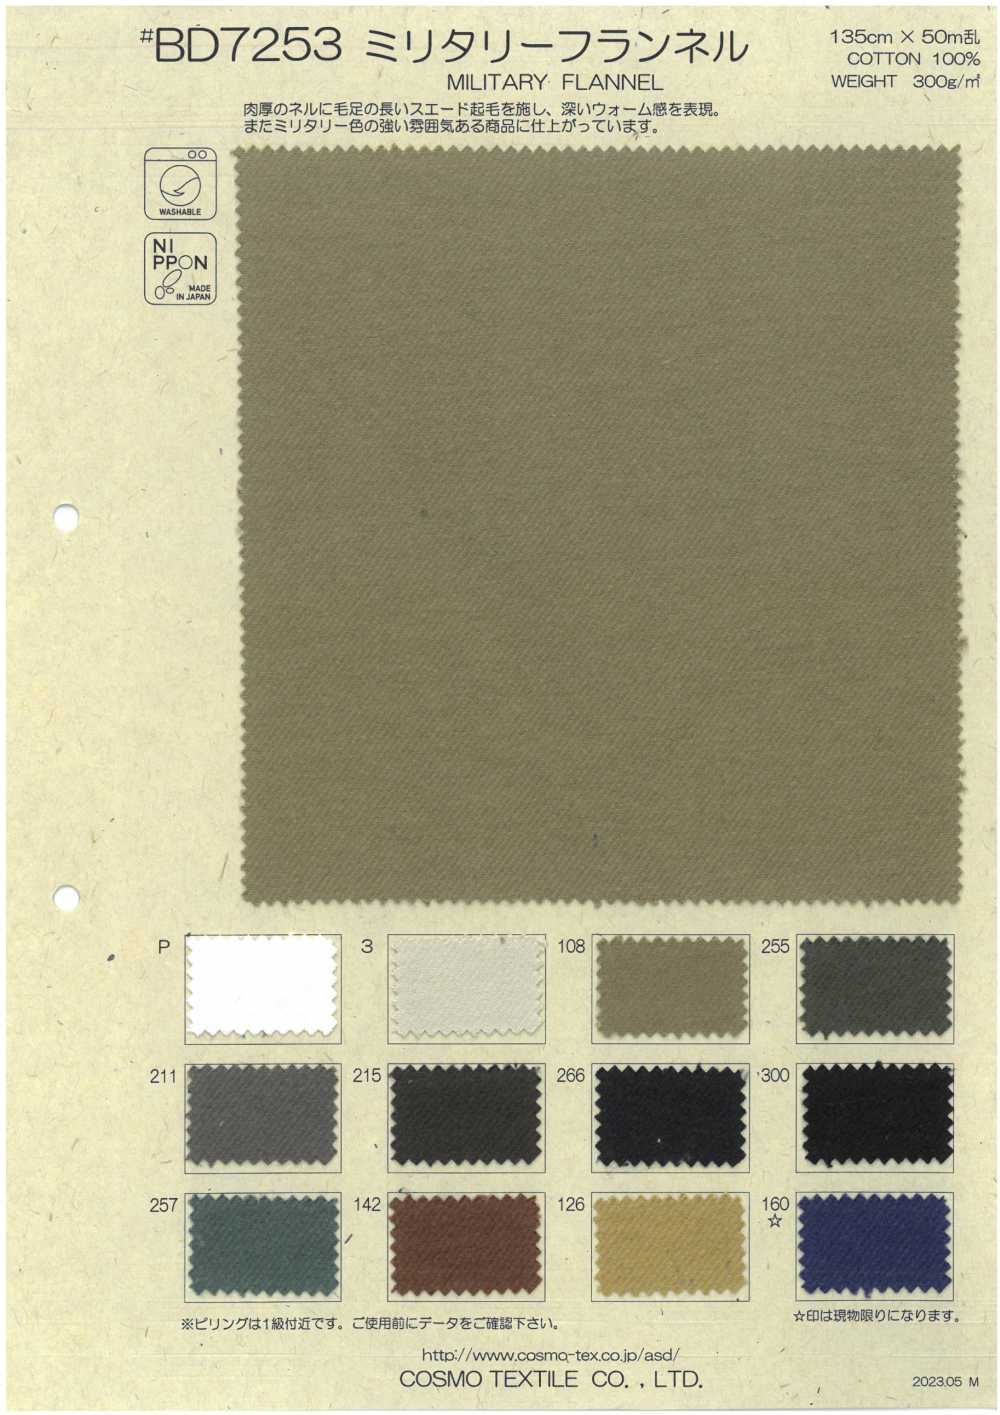 BD7253 Militärflanell[Textilgewebe] COSMO TEXTILE